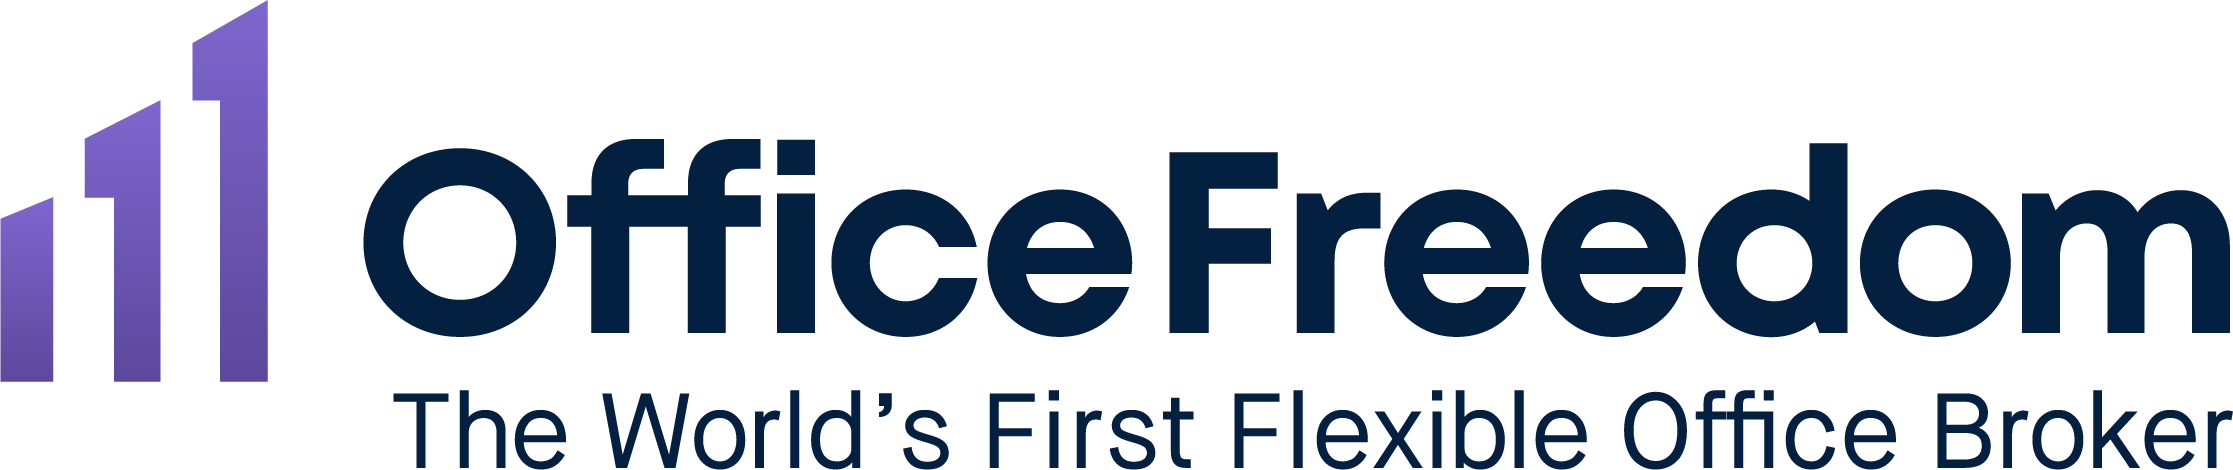 Office Freedom Logo